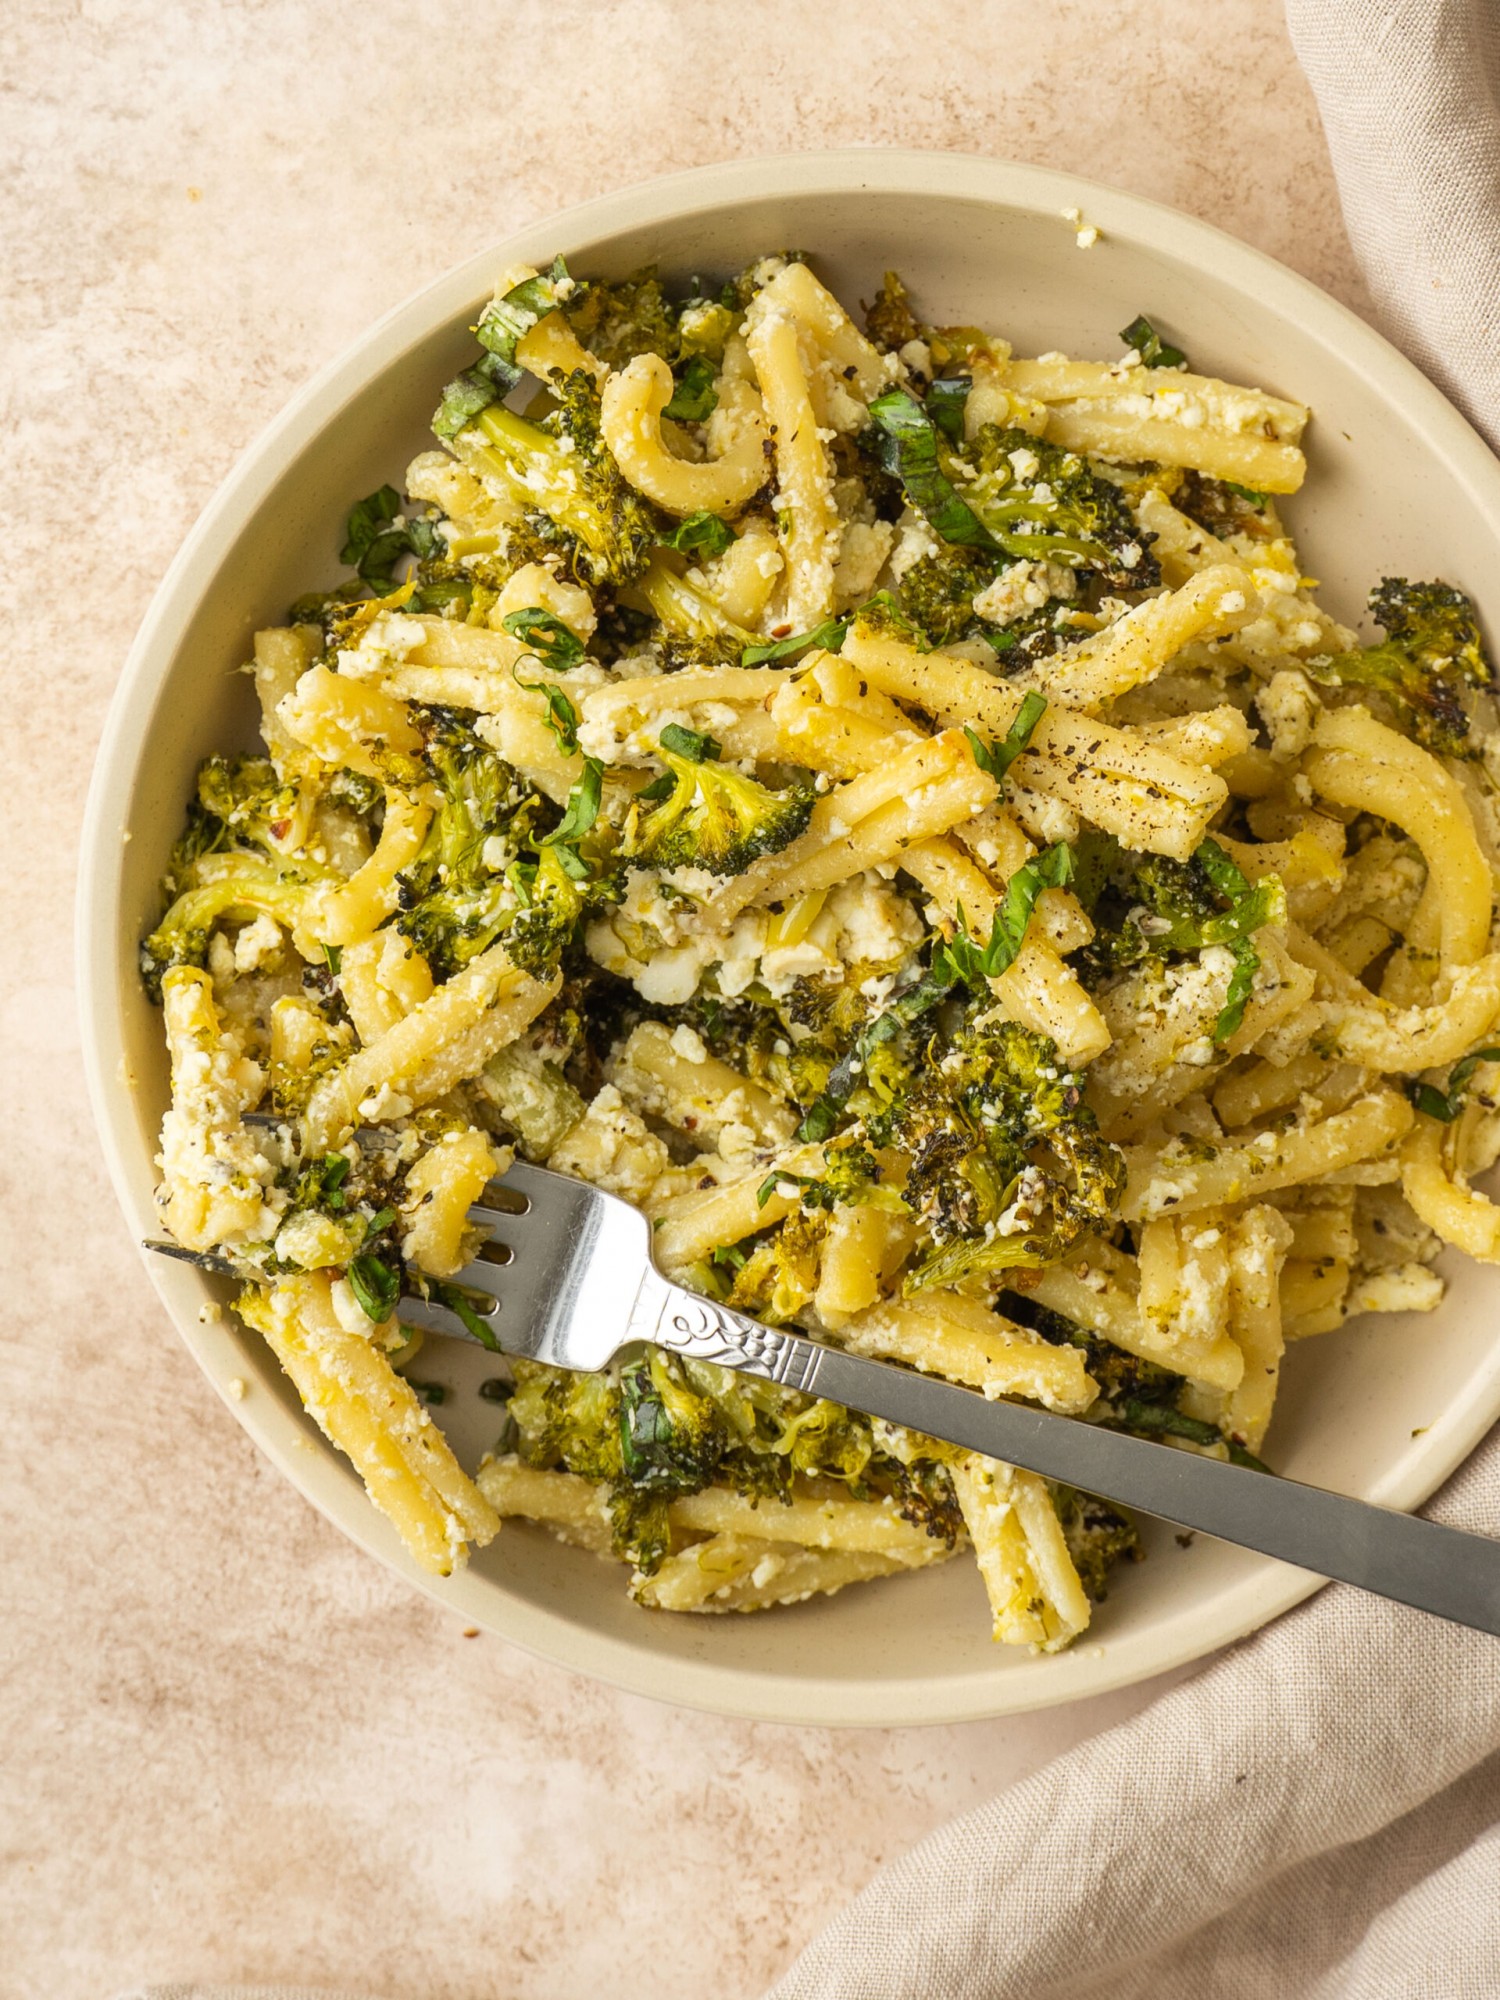 Baked Feta and Broccoli Pasta